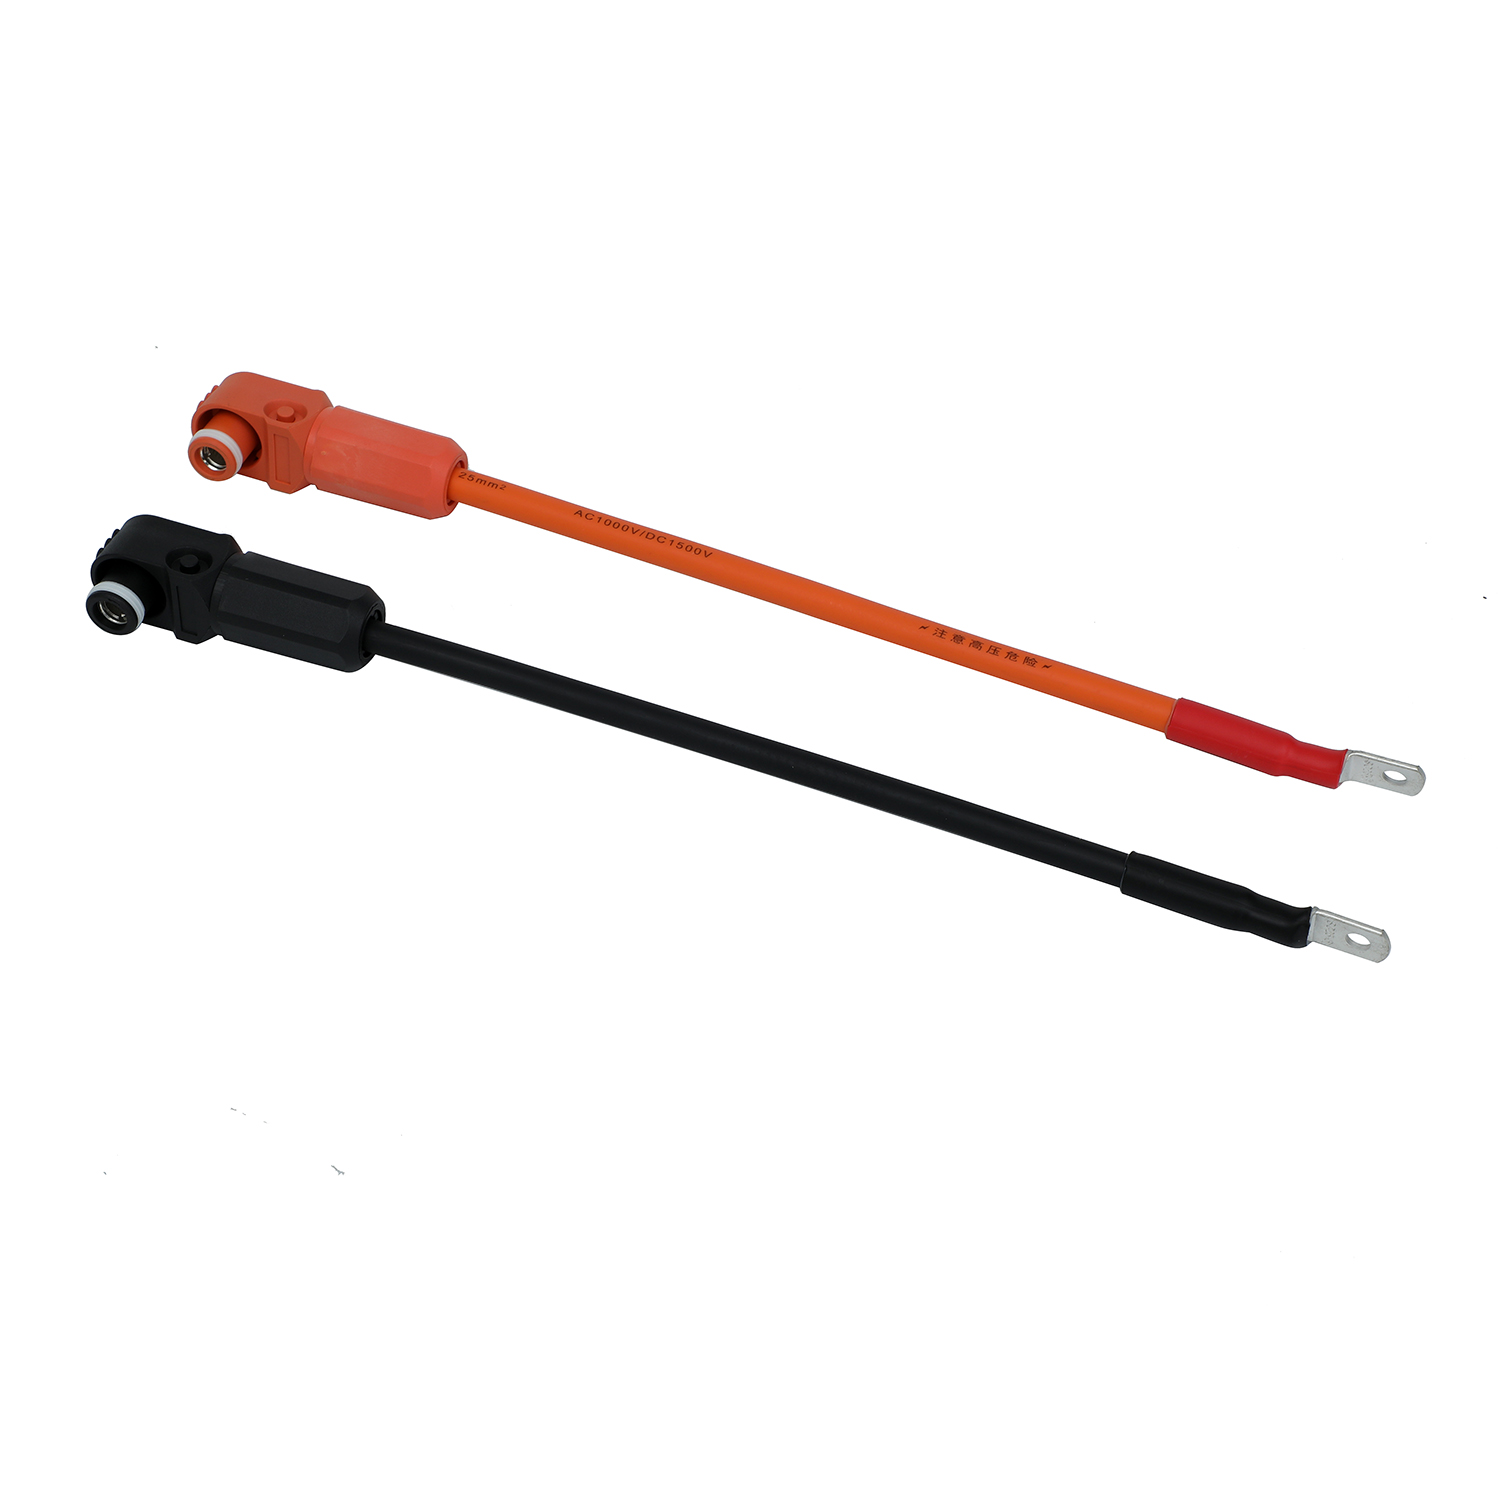 Cable de conexión de almacenamiento de energía 8 mm 200a/300a enchufe de enchufe